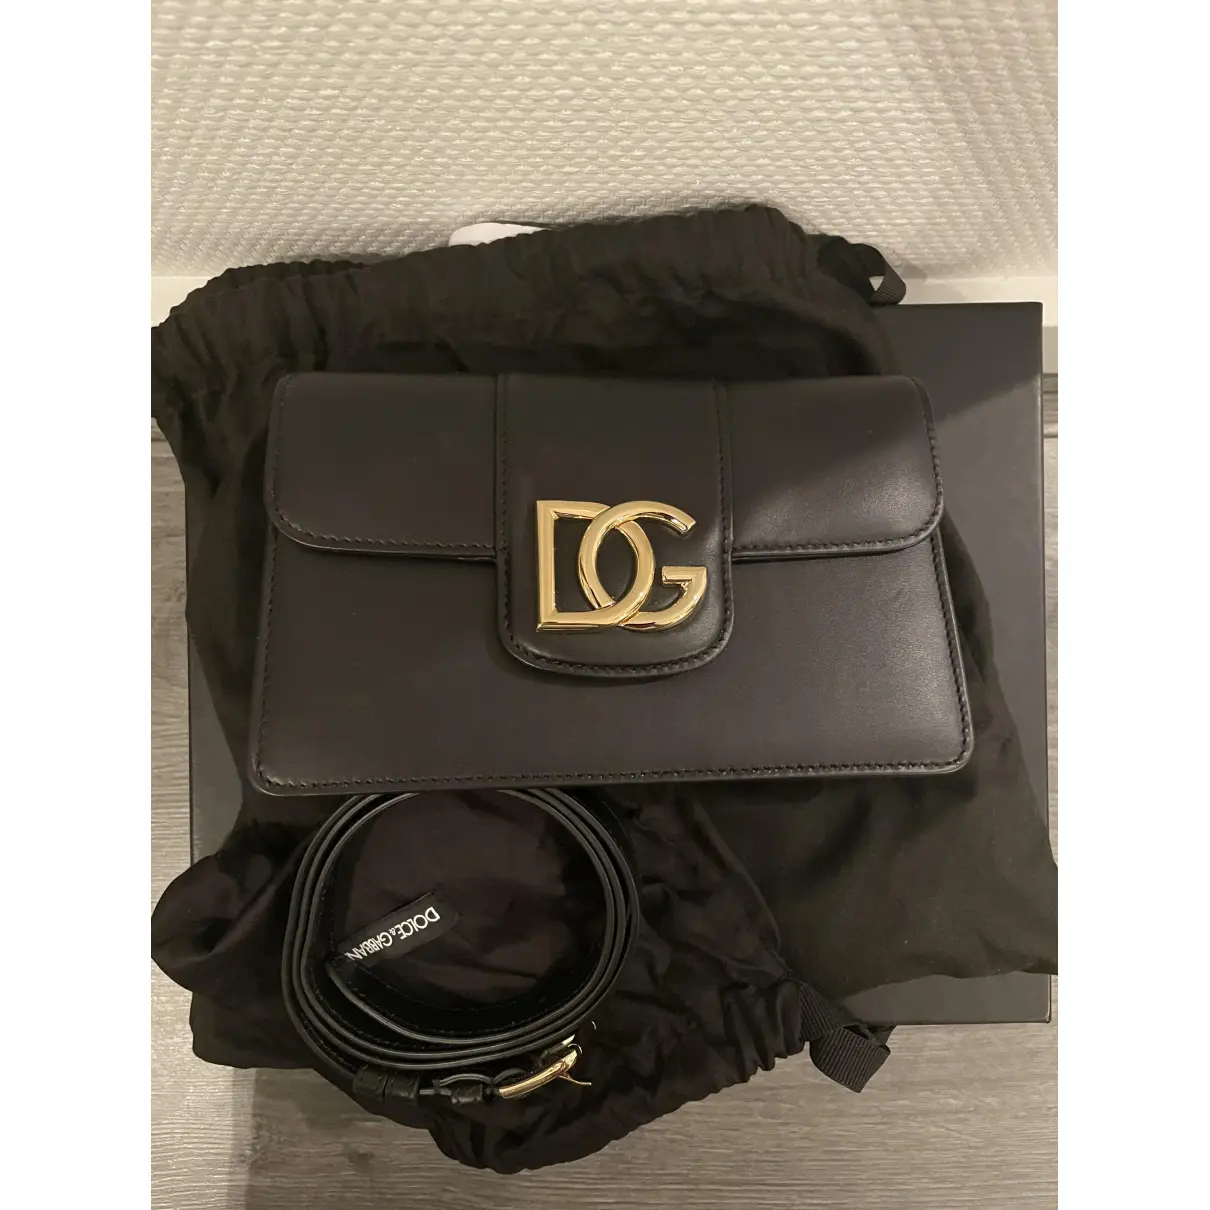 Buy Dolce & Gabbana Millenials leather bag online